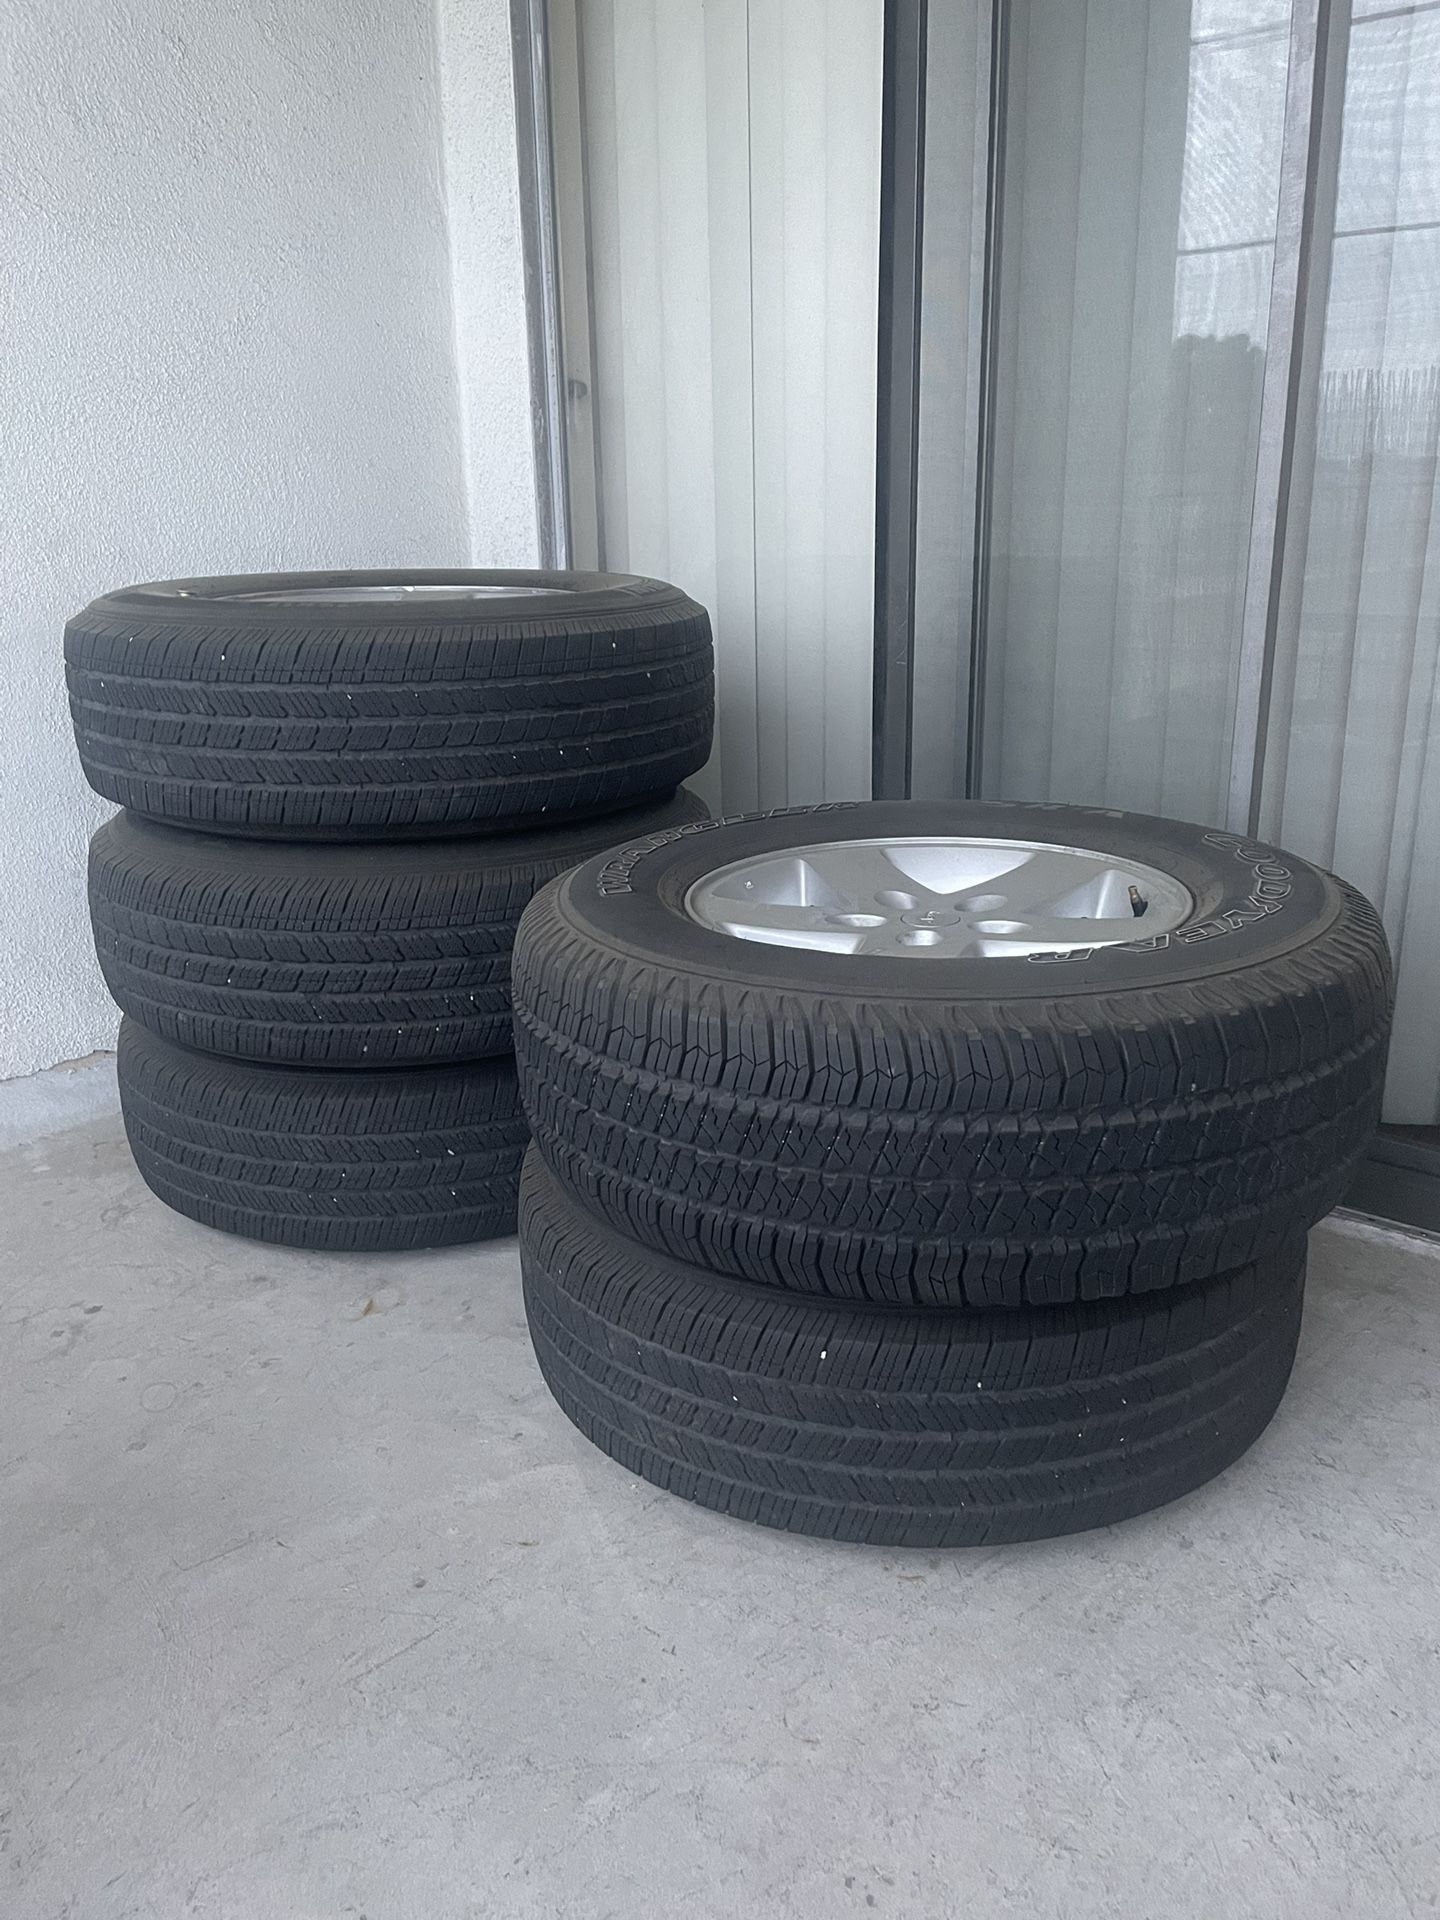 Jeep Wrangler 2018 JK Tires